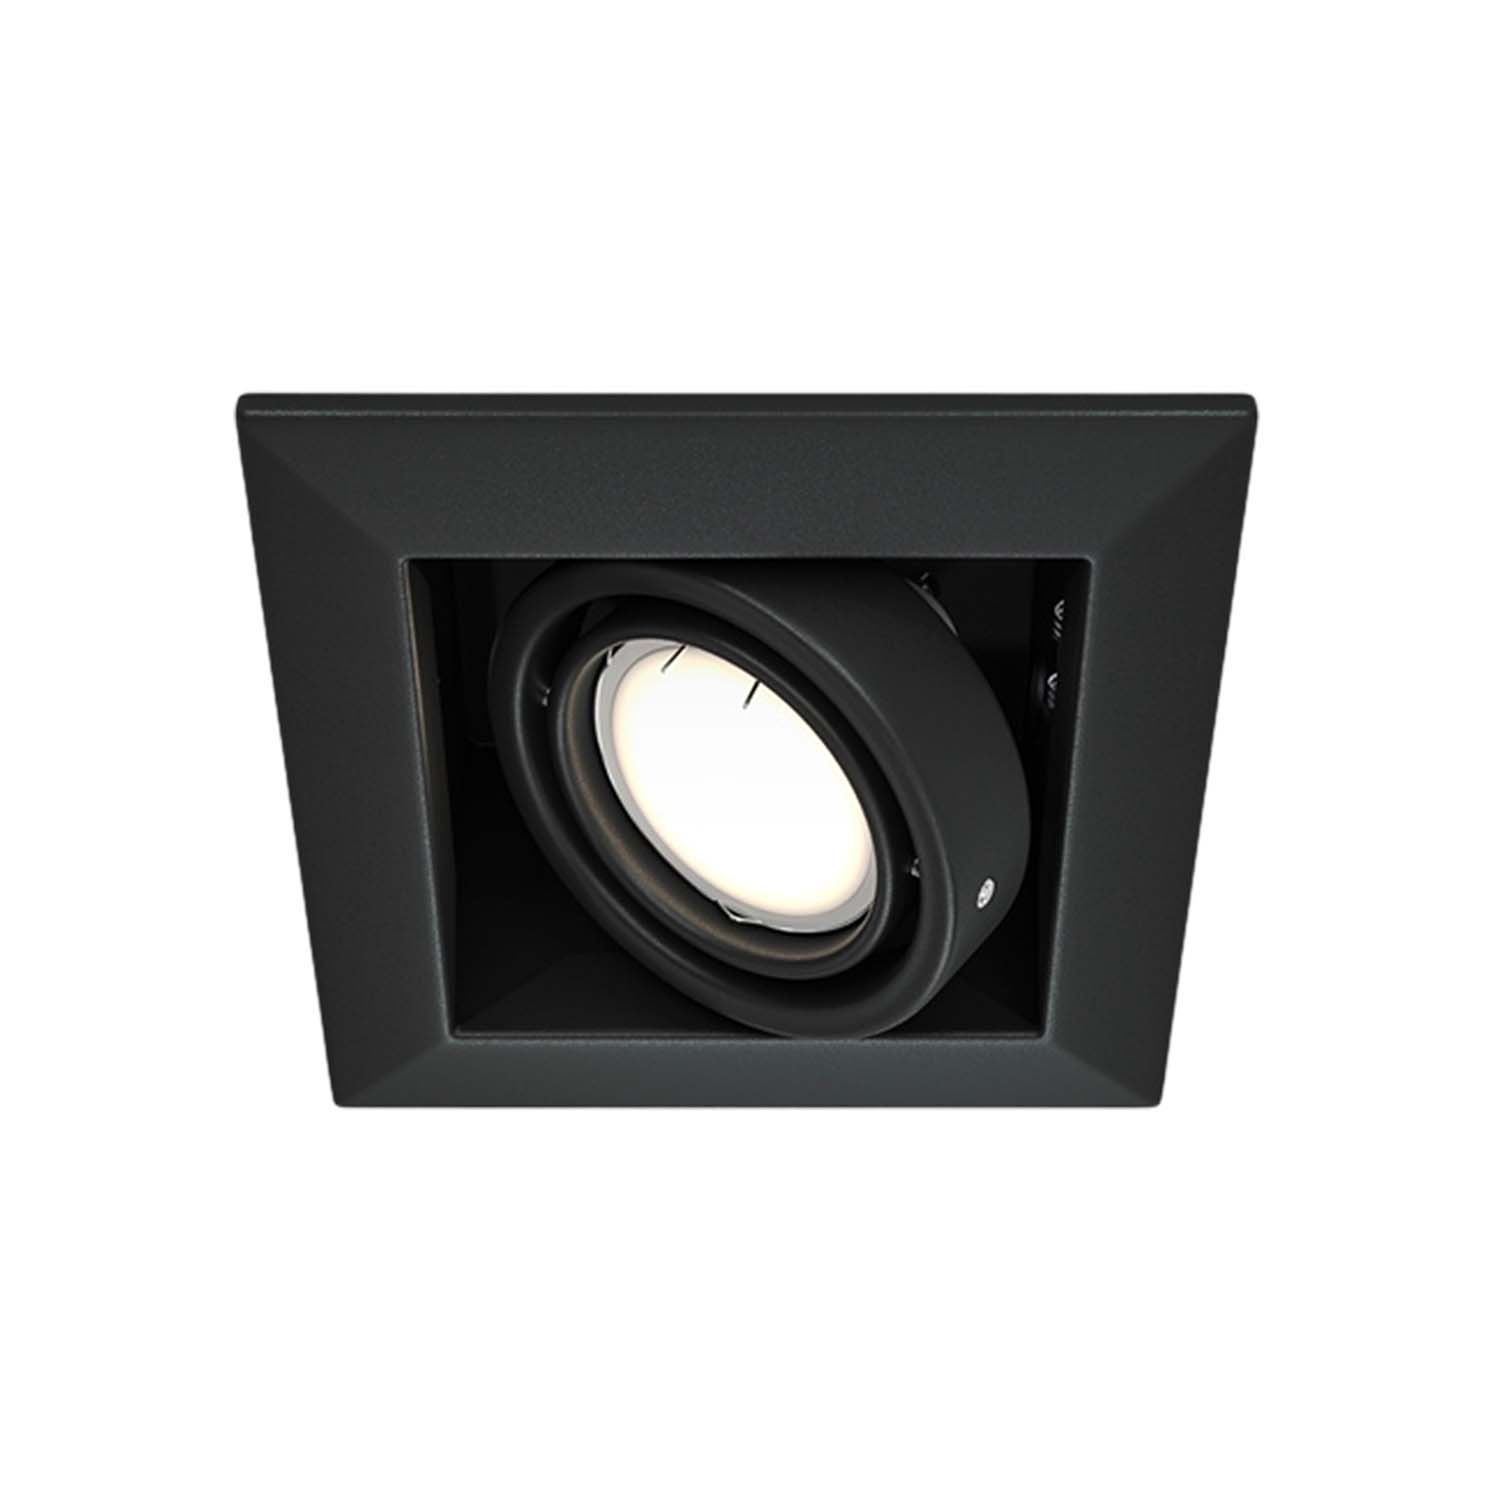 METAL MODERN A - Square spotlight 126mm black or white, adjustable